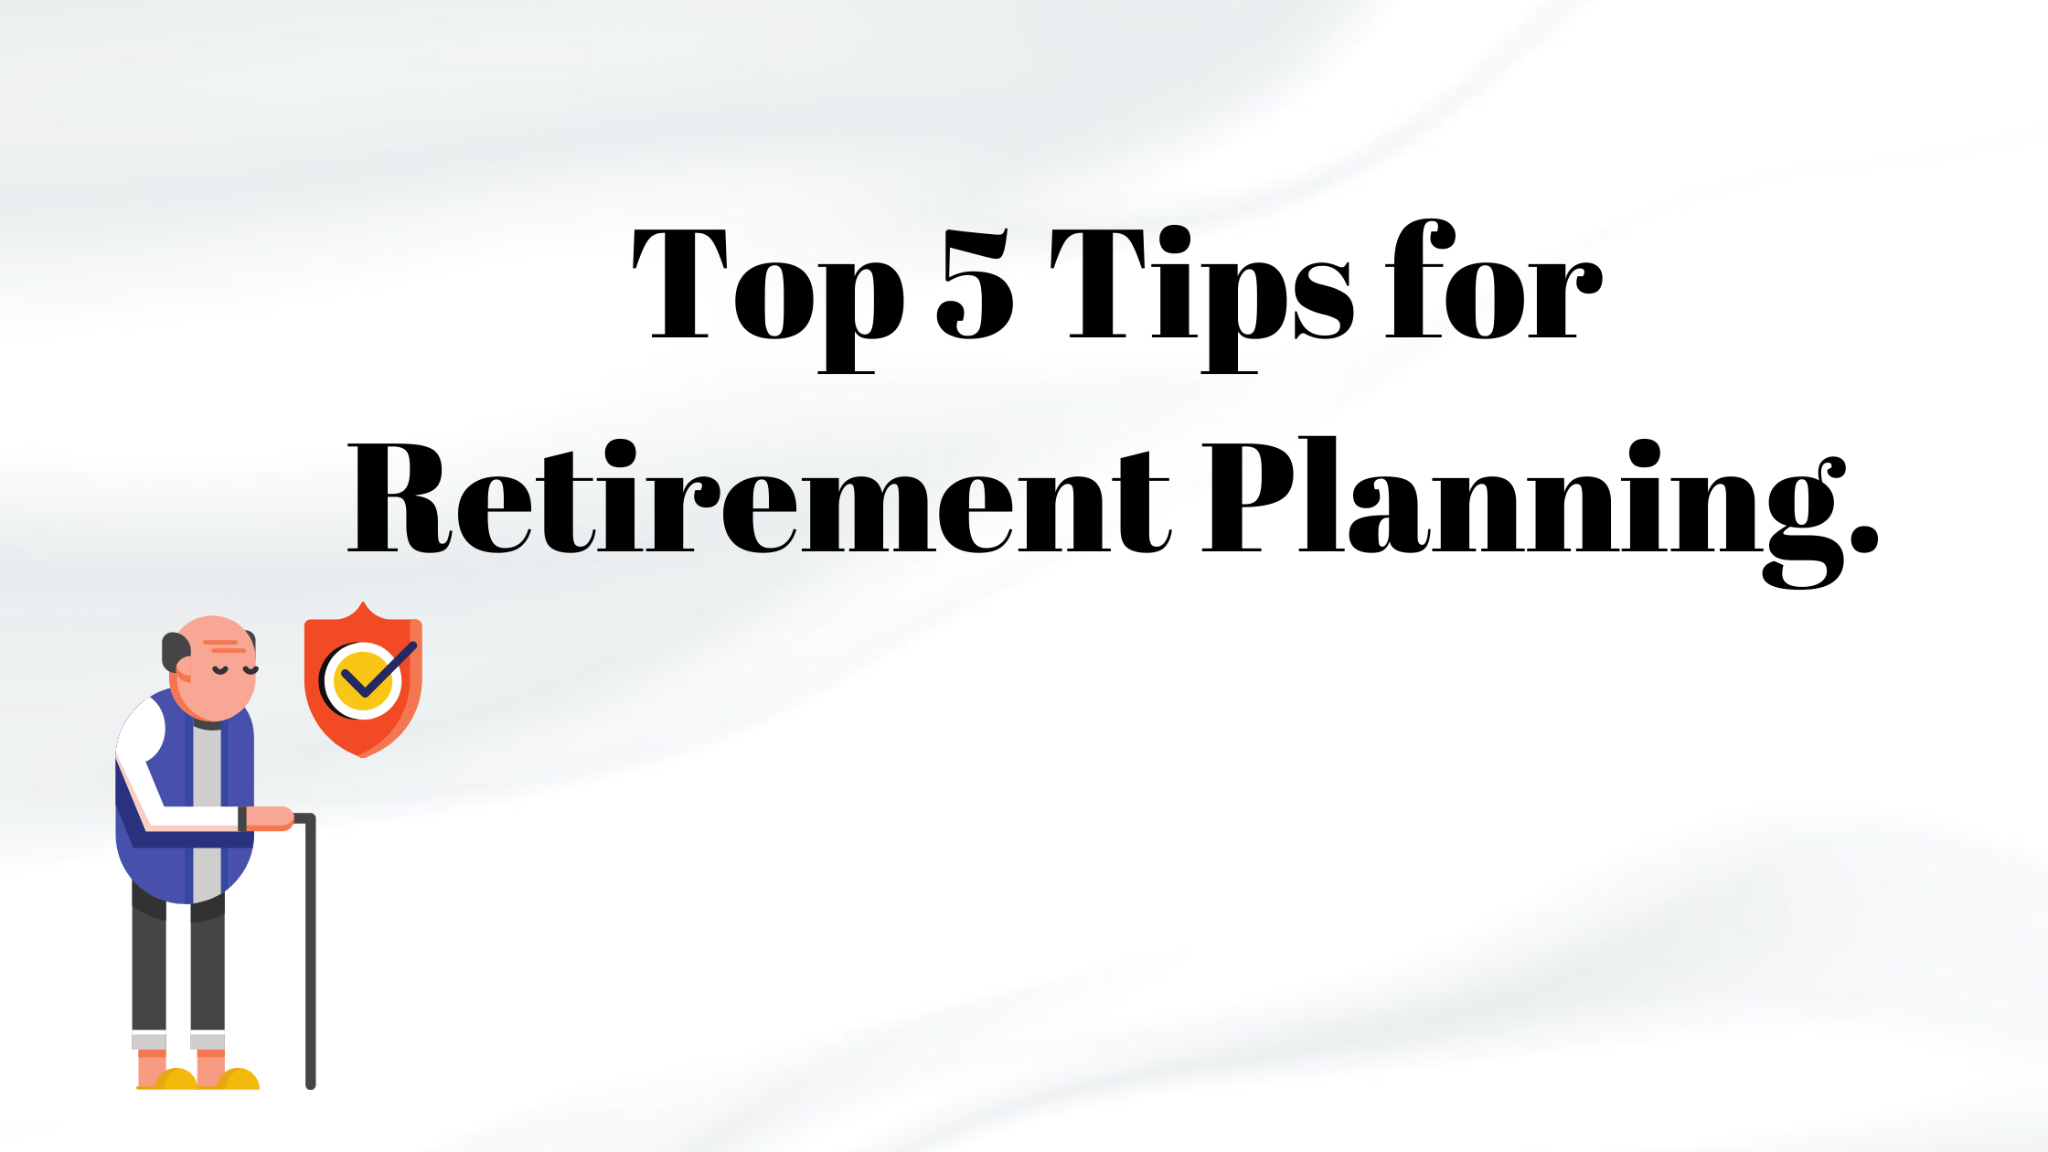 Tips for Retirement Planning